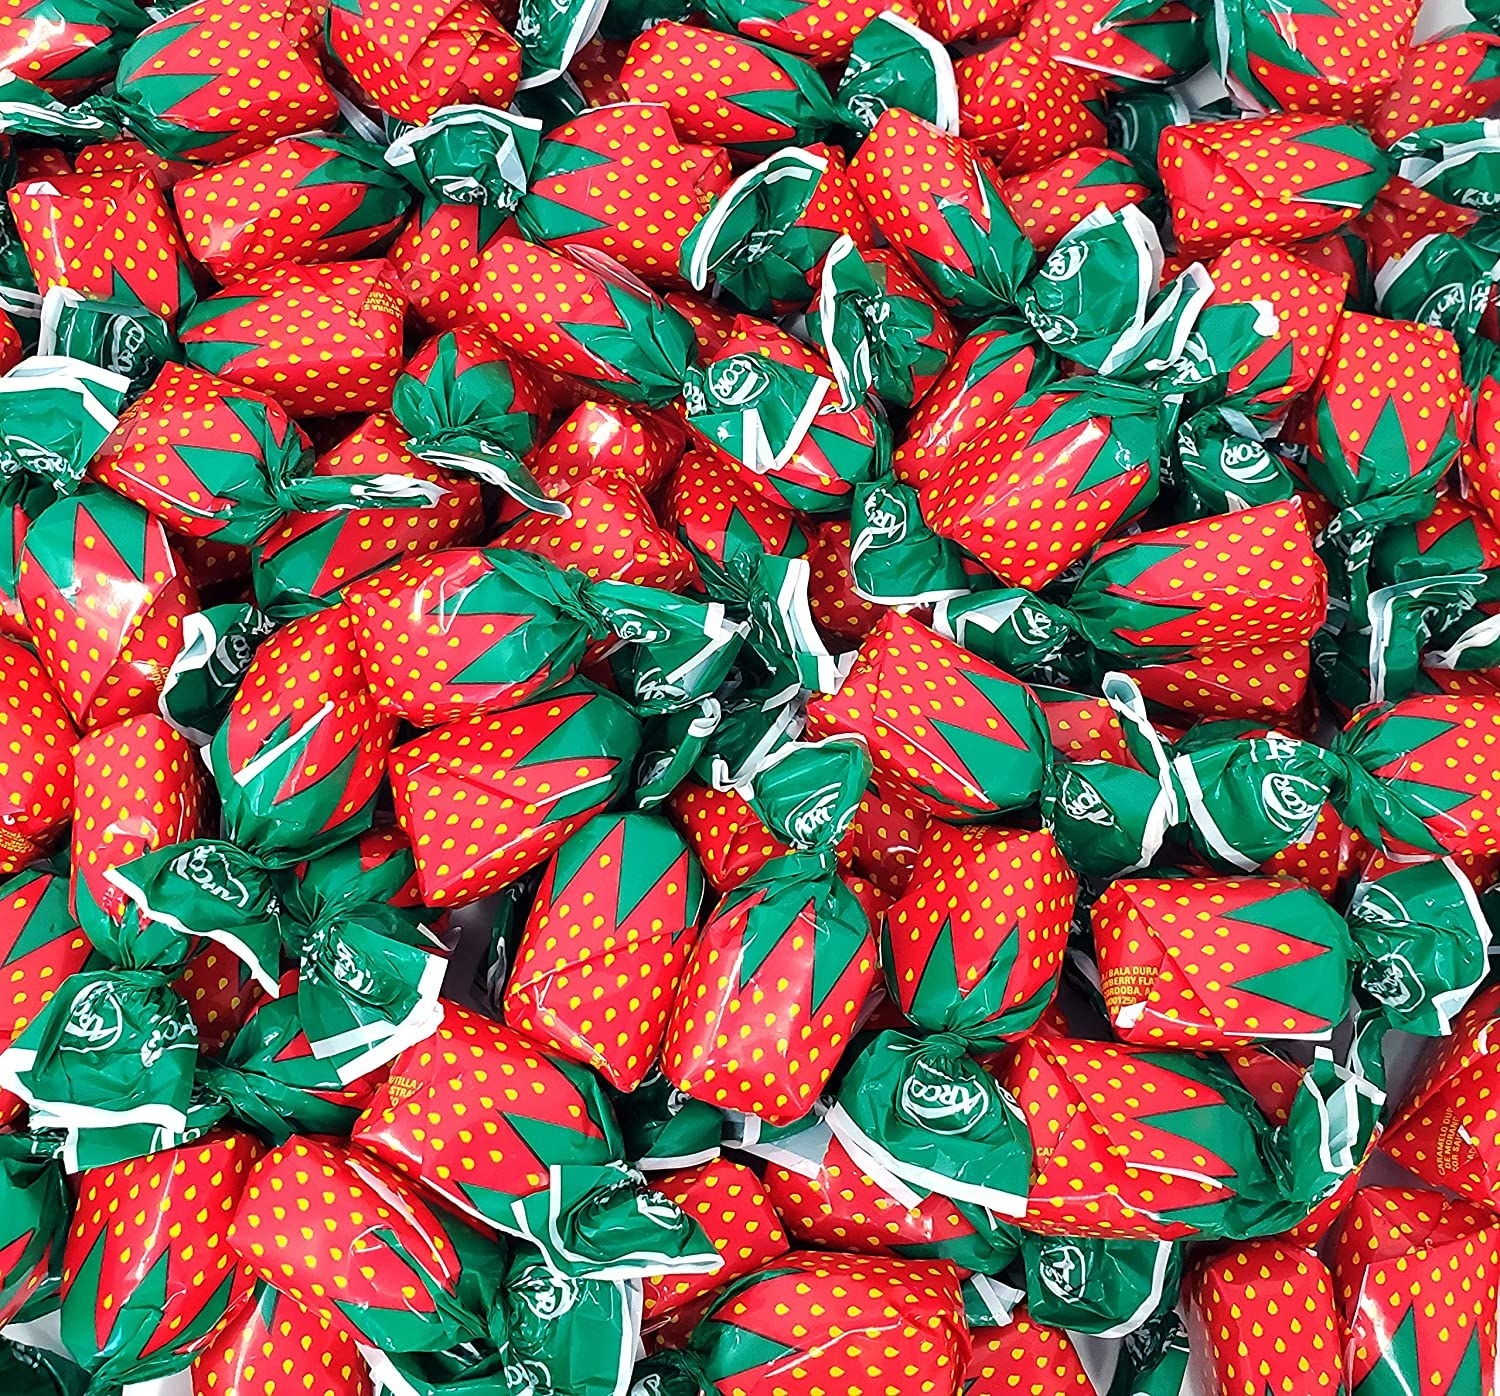 Strawberry candy